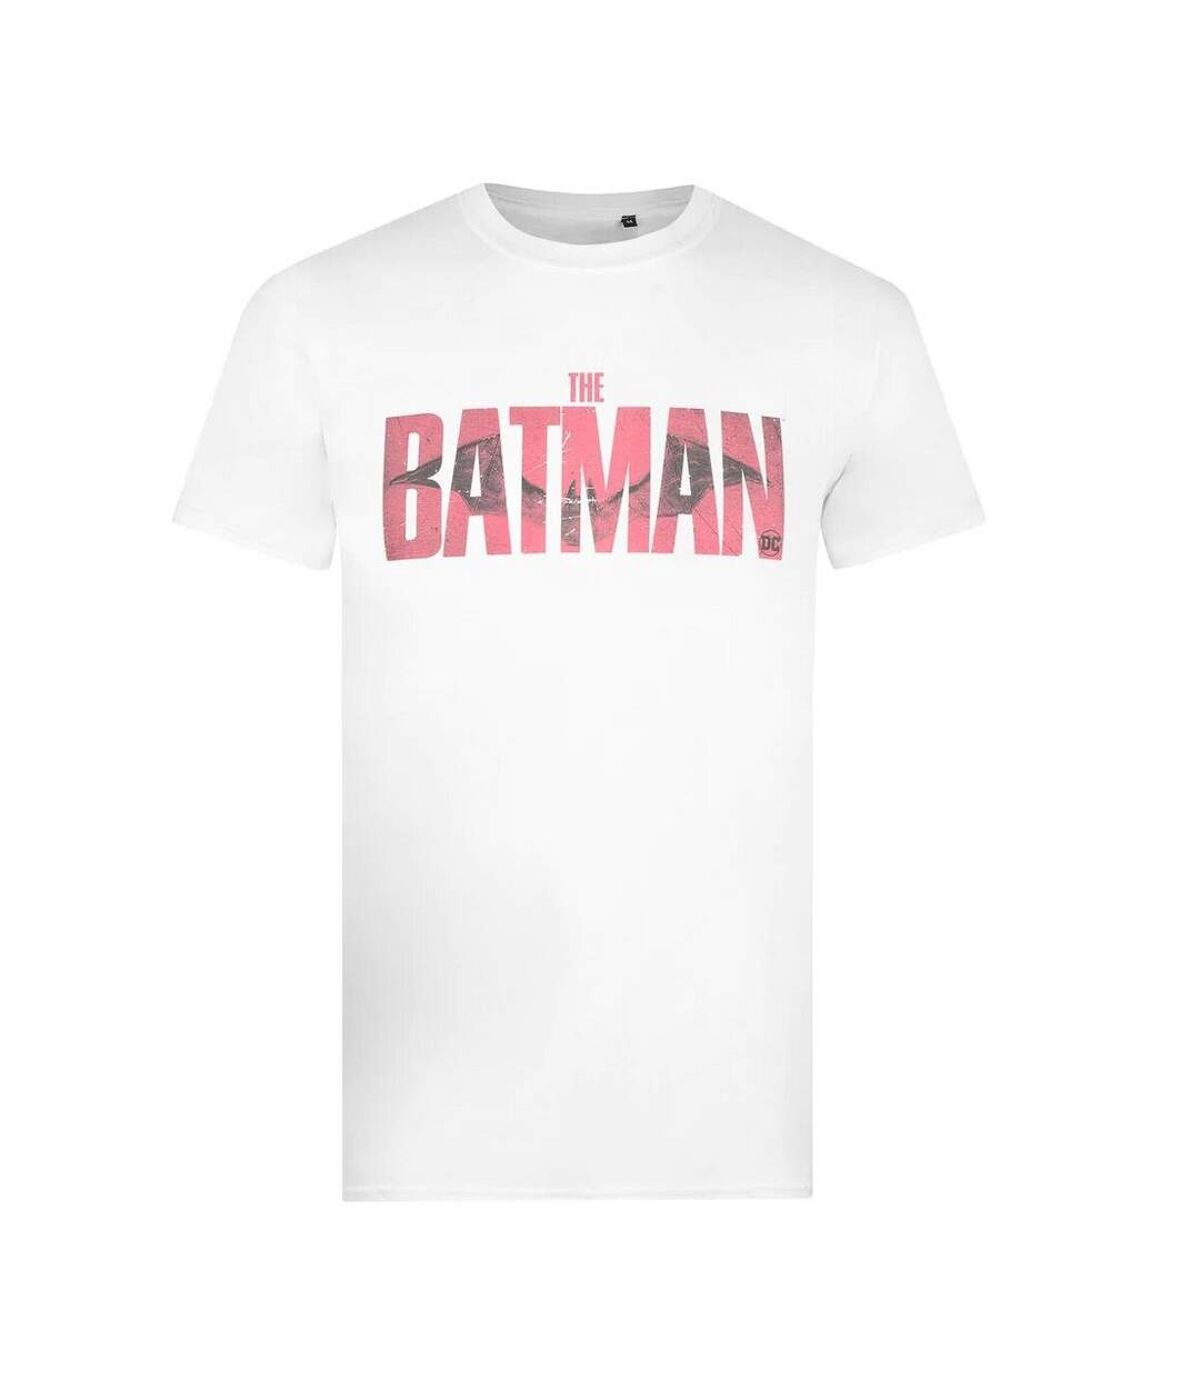 Batman - T-shirt - Homme (Blanc) - UTTV869